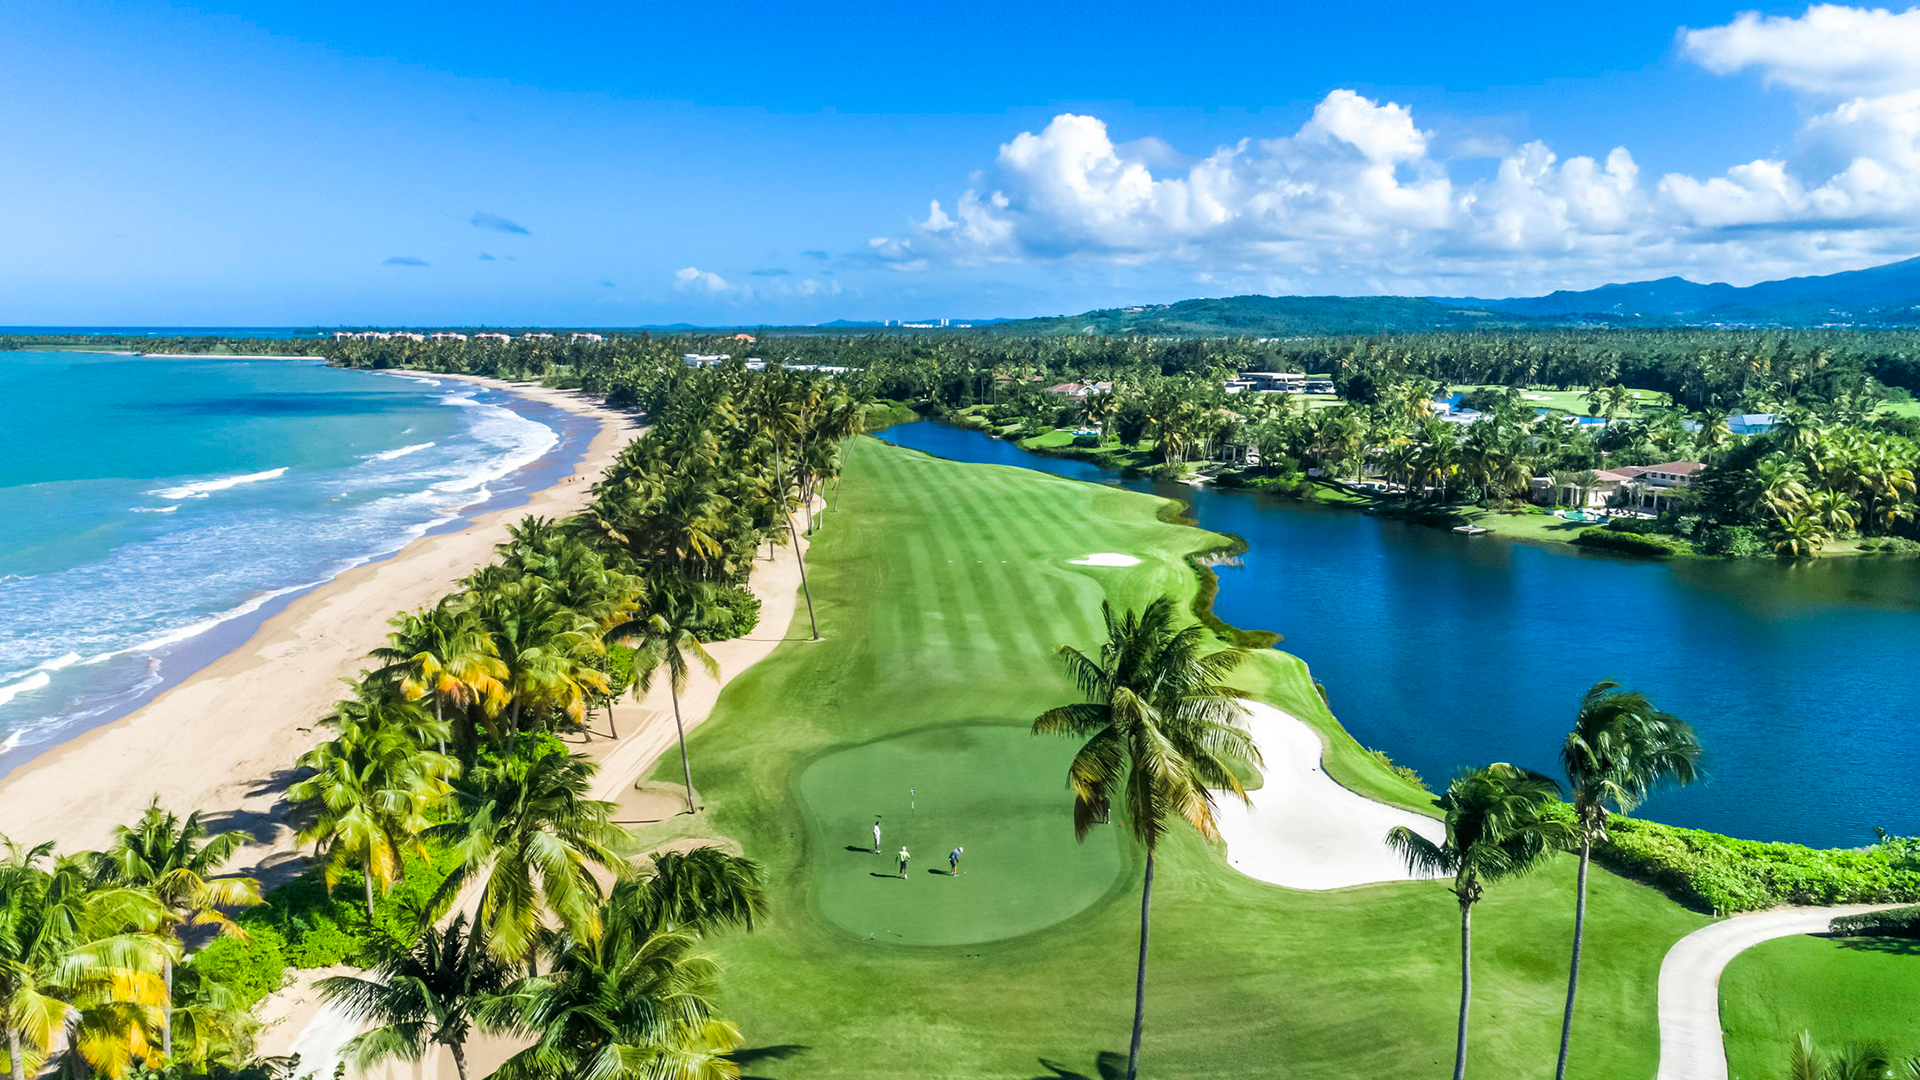 Campo de golf con un entorno natural en Puerto Rico